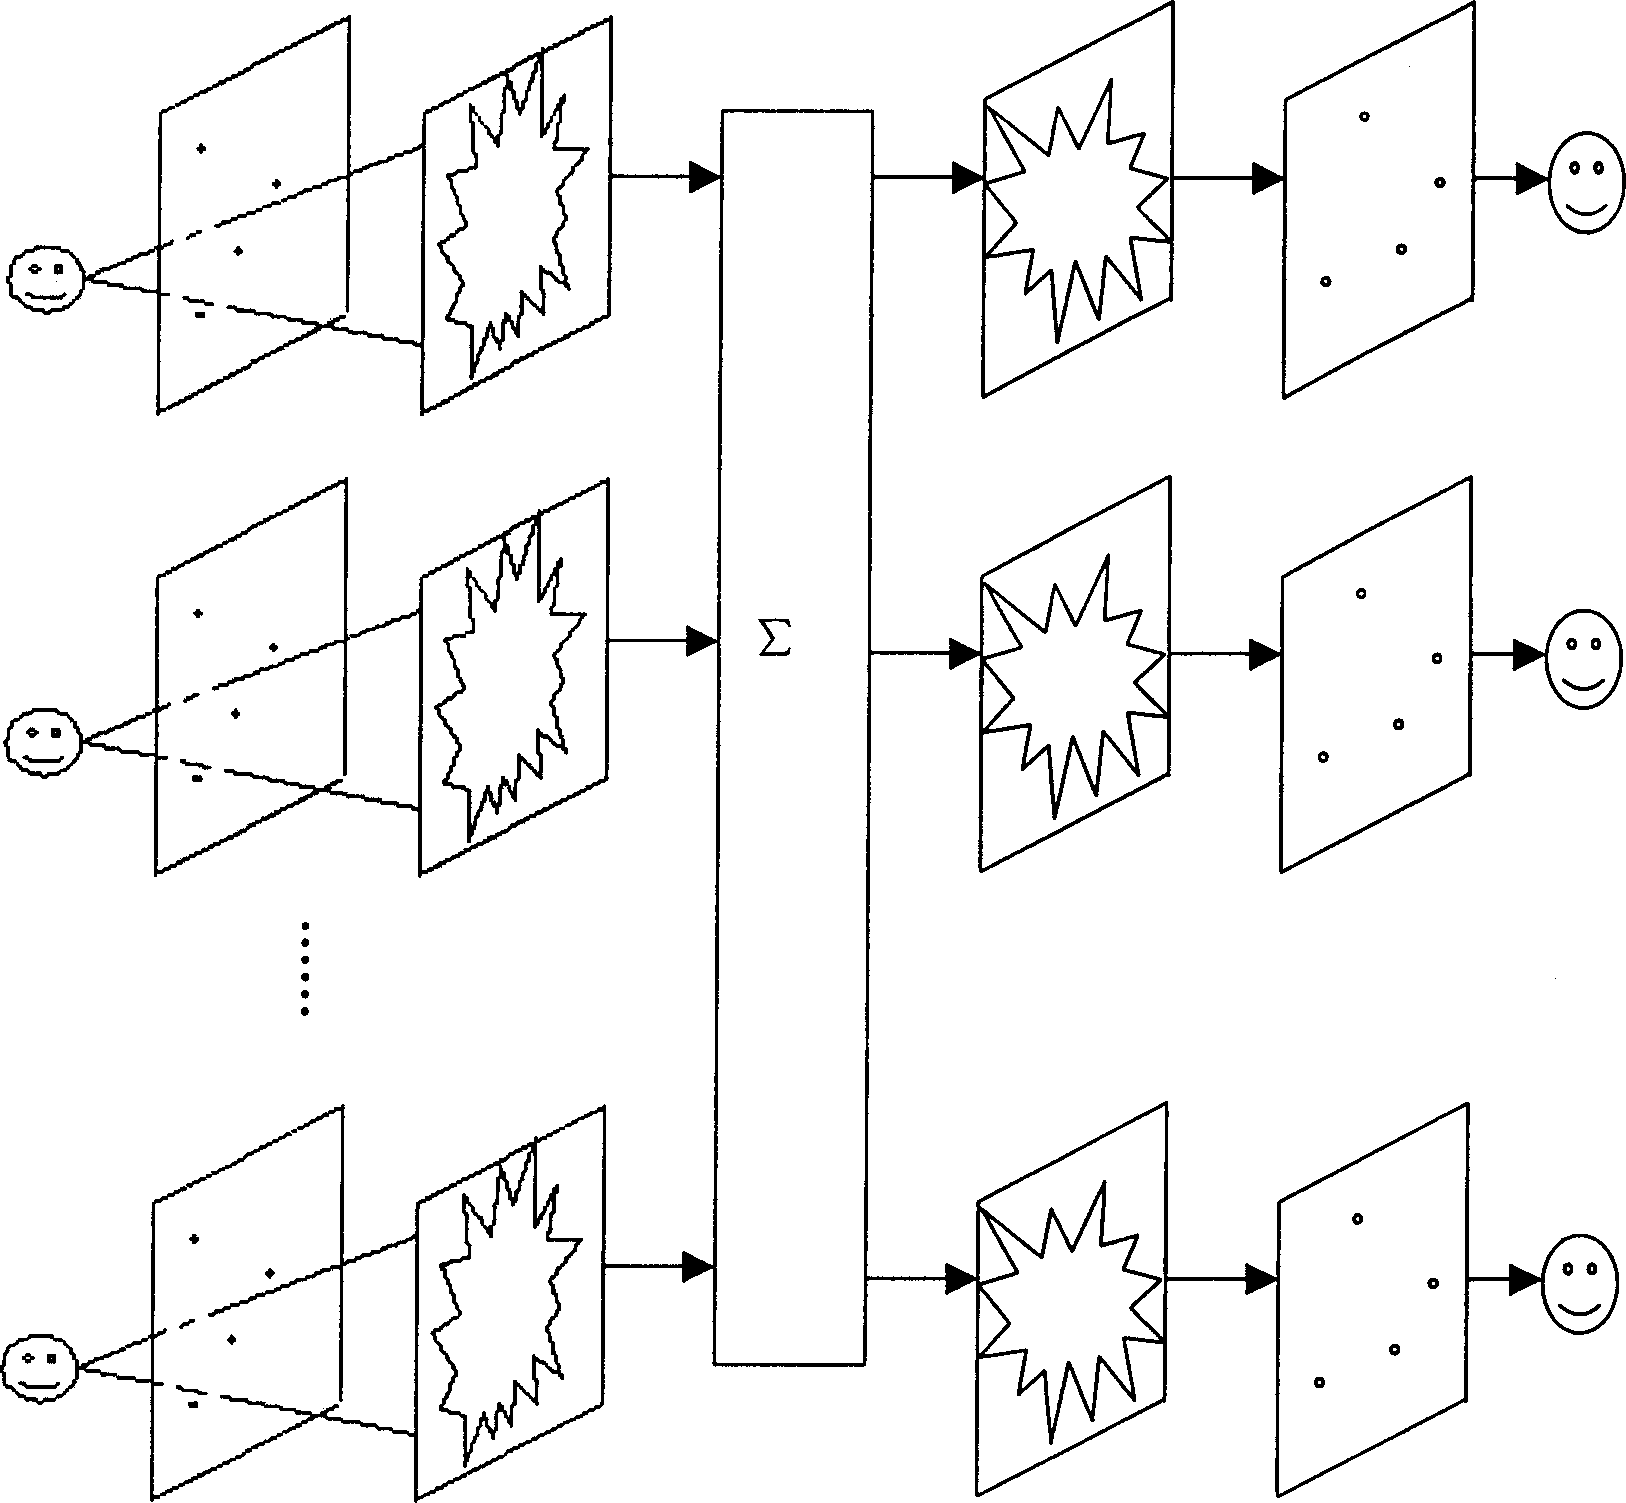 Design method for 2-D signals with low/zero correlation region